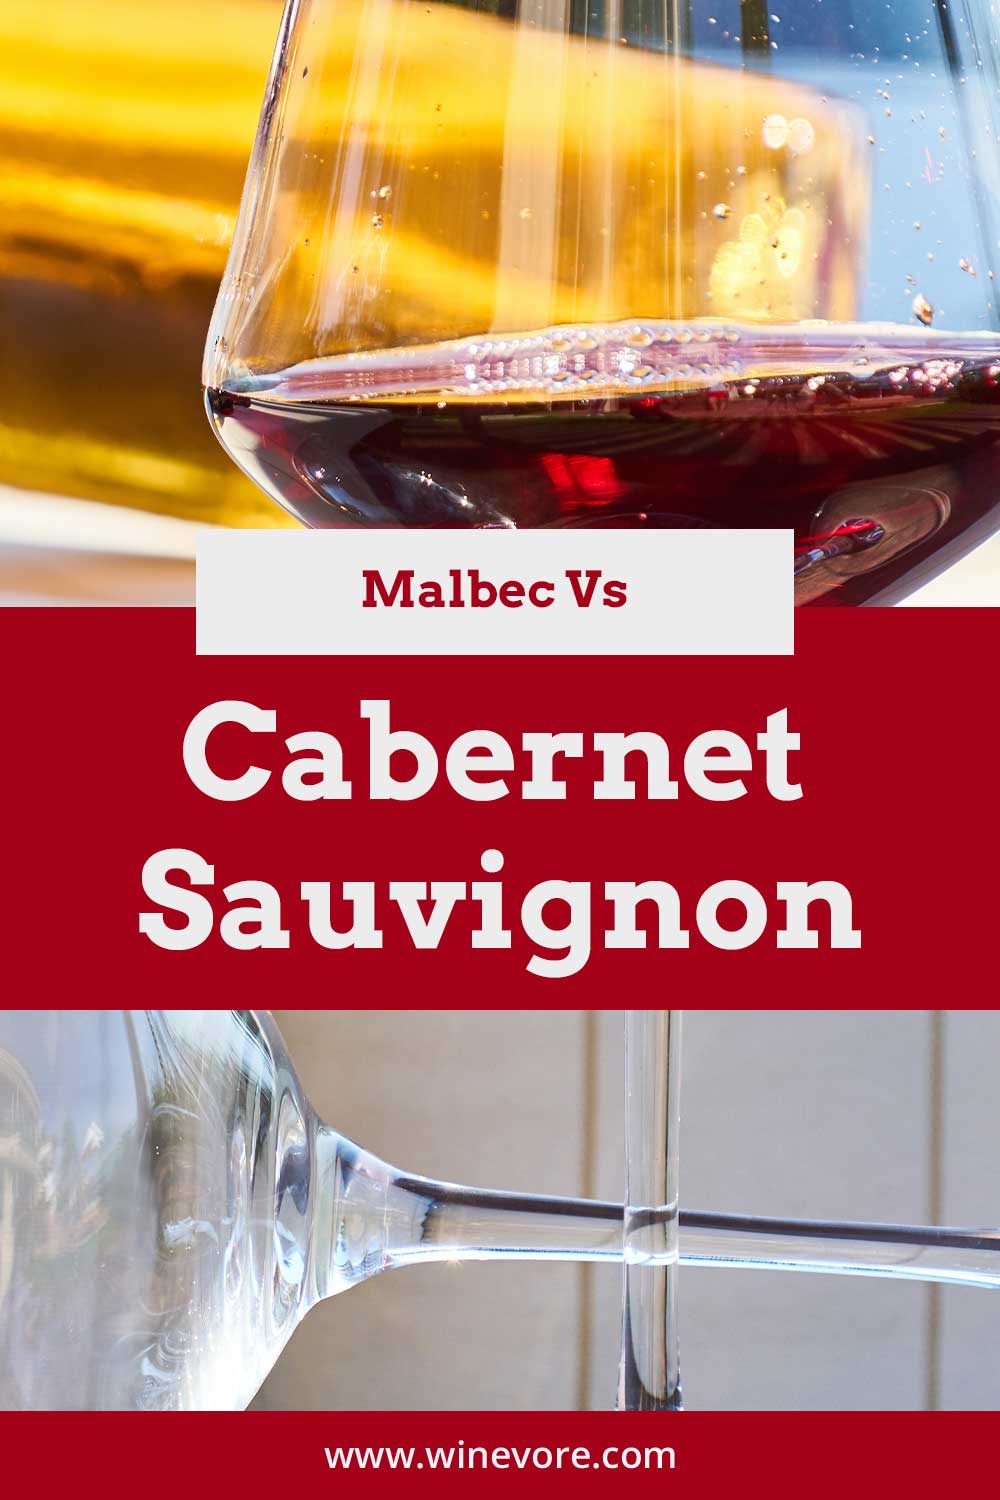 A wine glass lying beside a glass of red wine - Malbec Vs Cabernet Sauvignon.